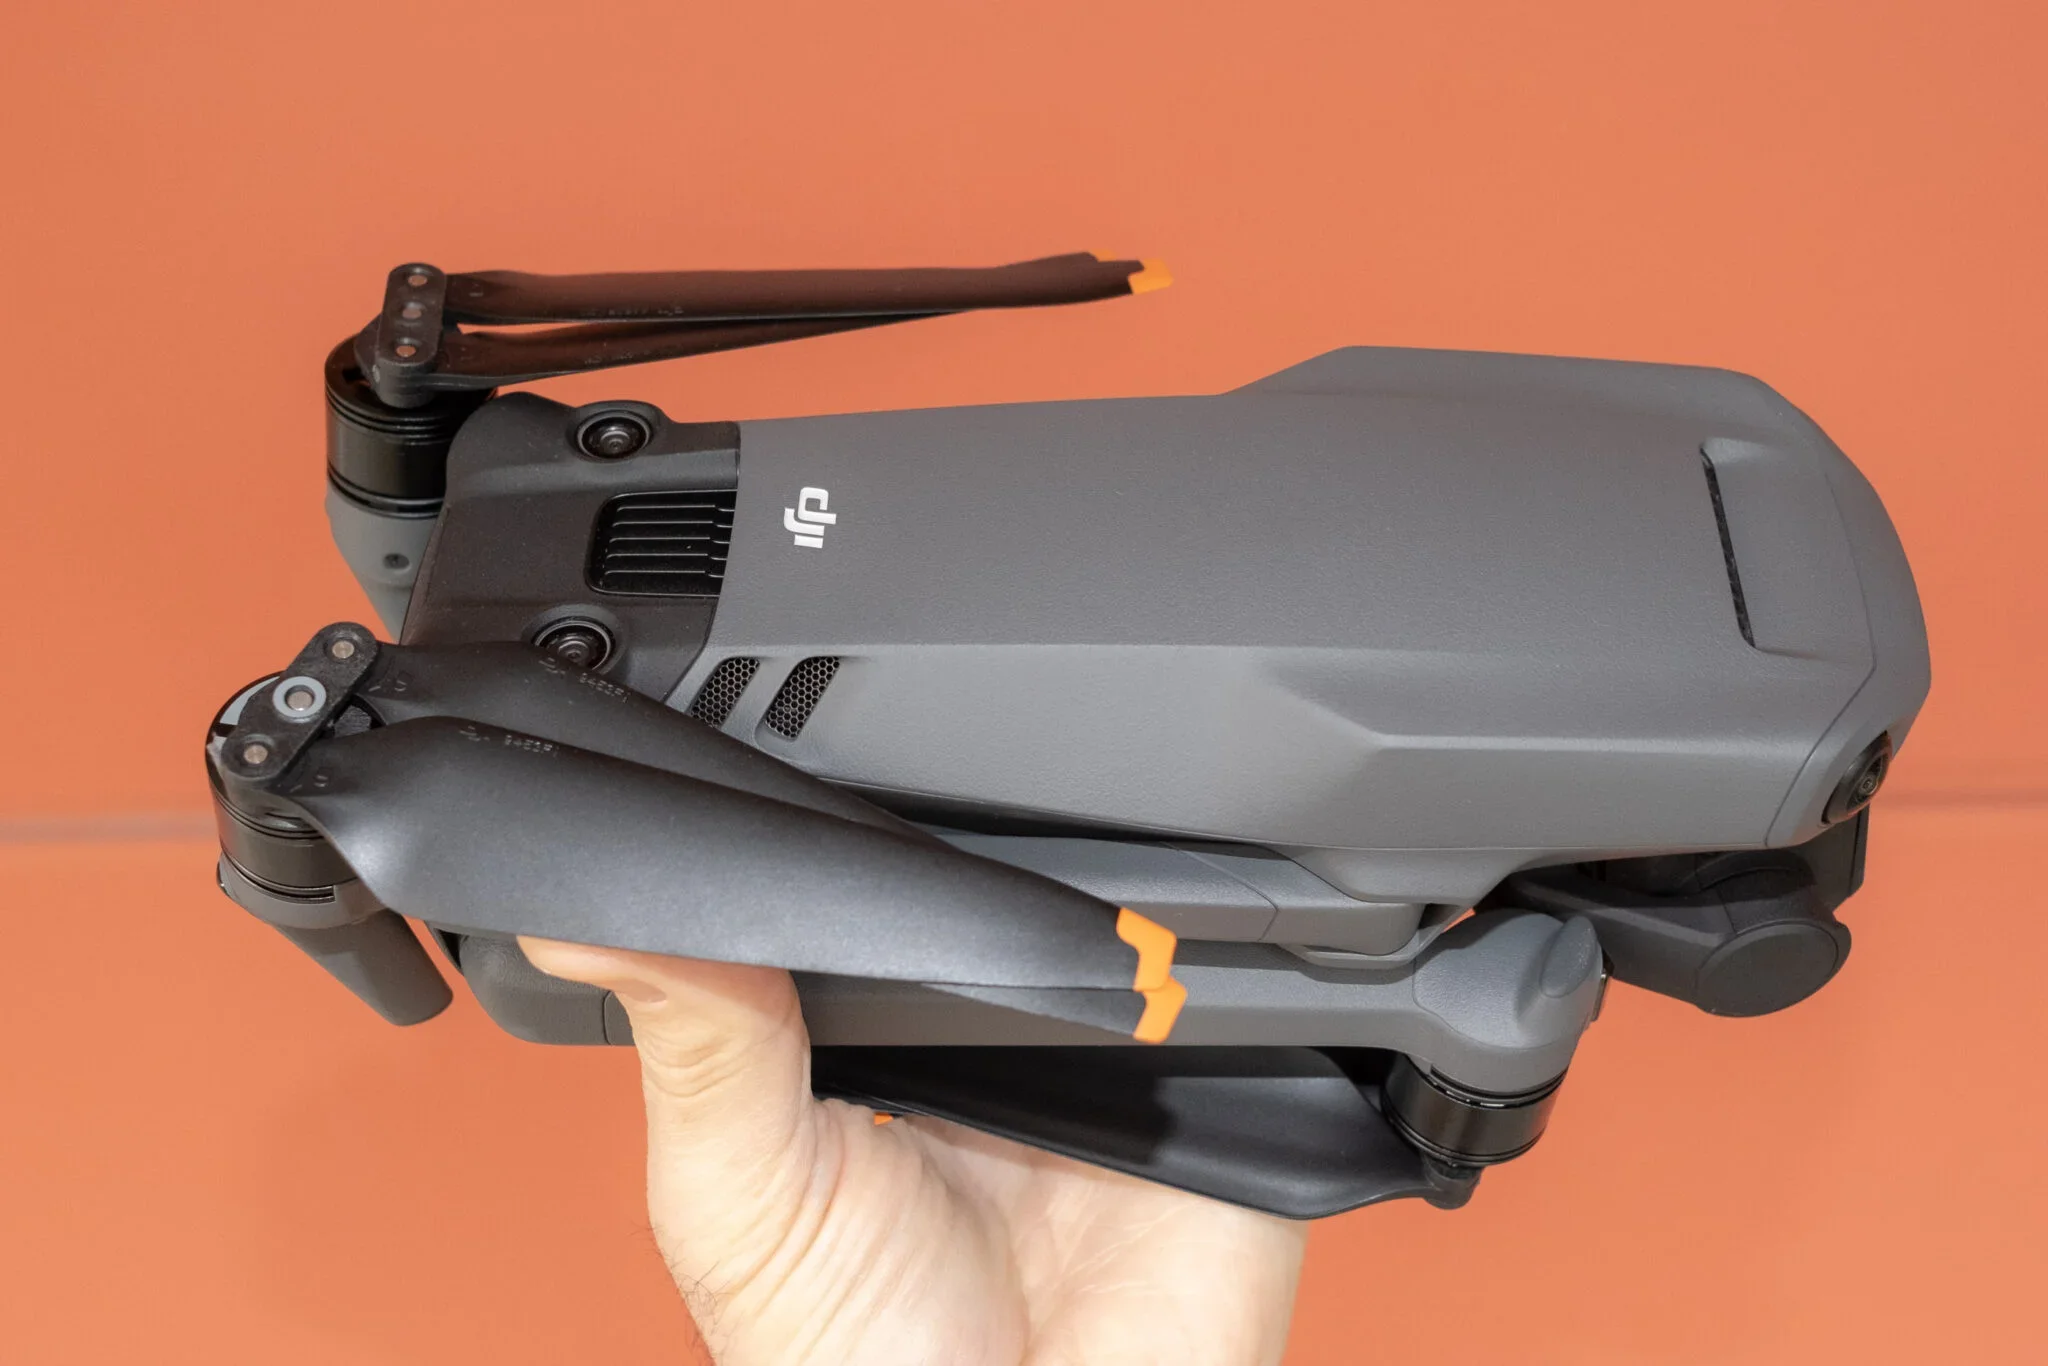 DJI Mavic 3 drone in a hand on an orange background